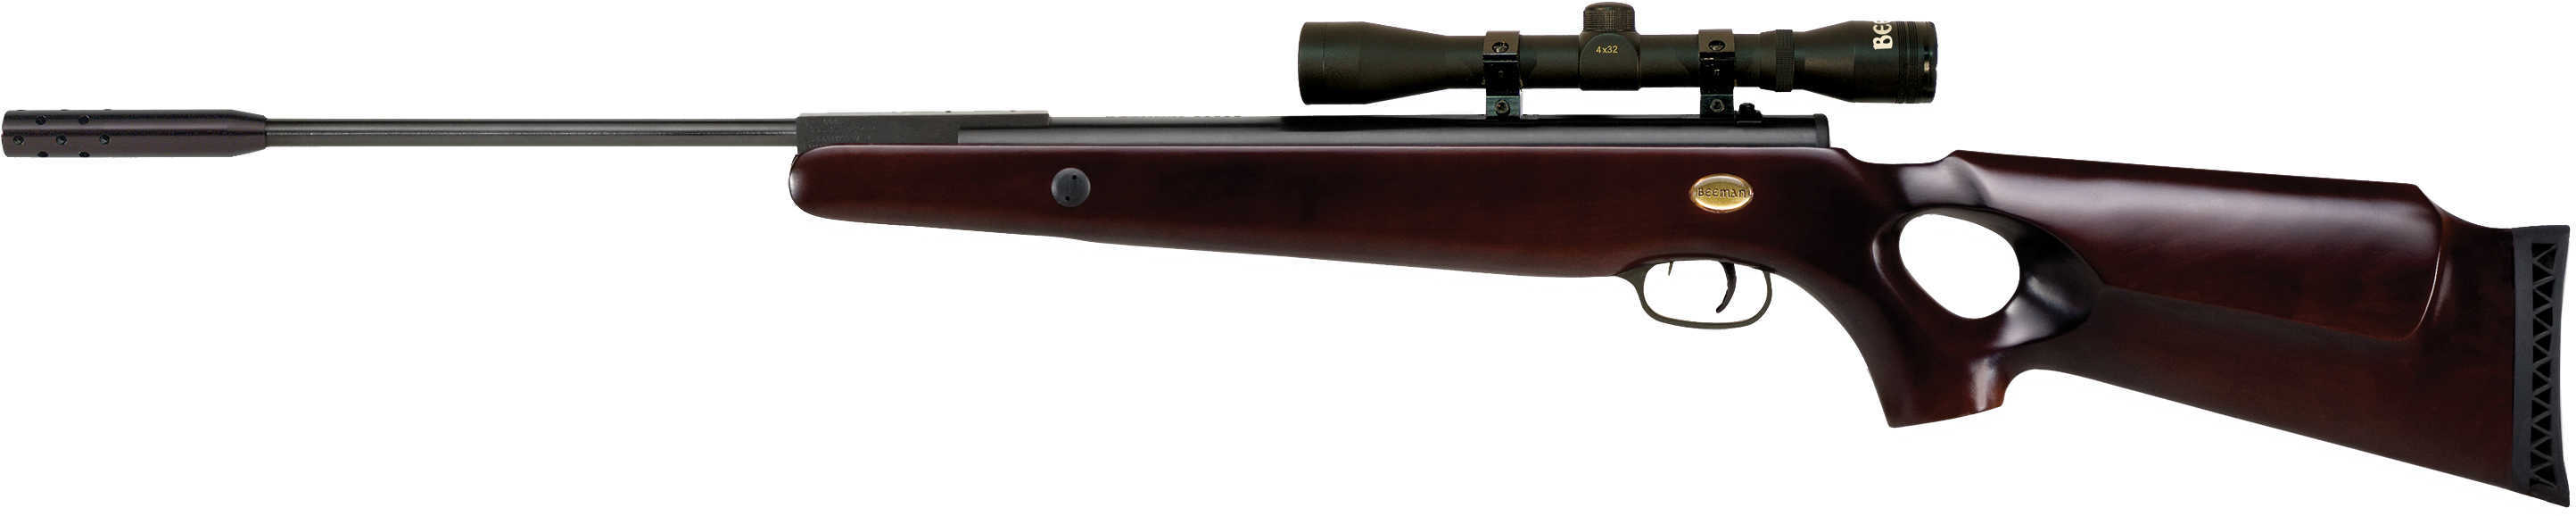 Beeman Ram XT Air Rifle .177 With 4x32 Scope 1087